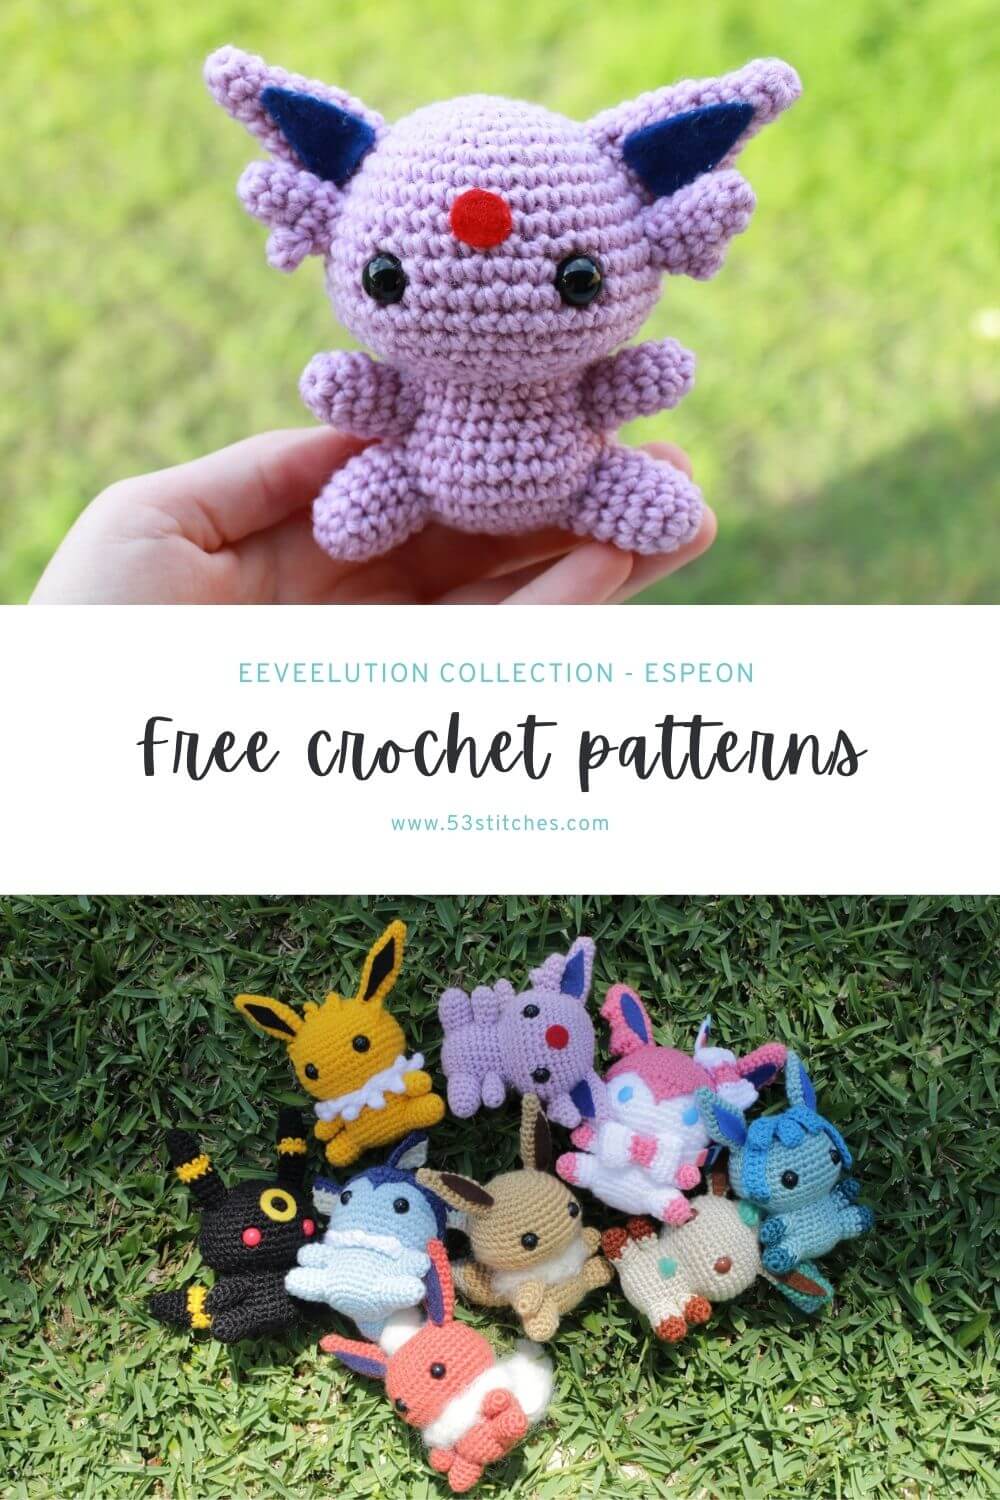 Free Espeon crochet pattern